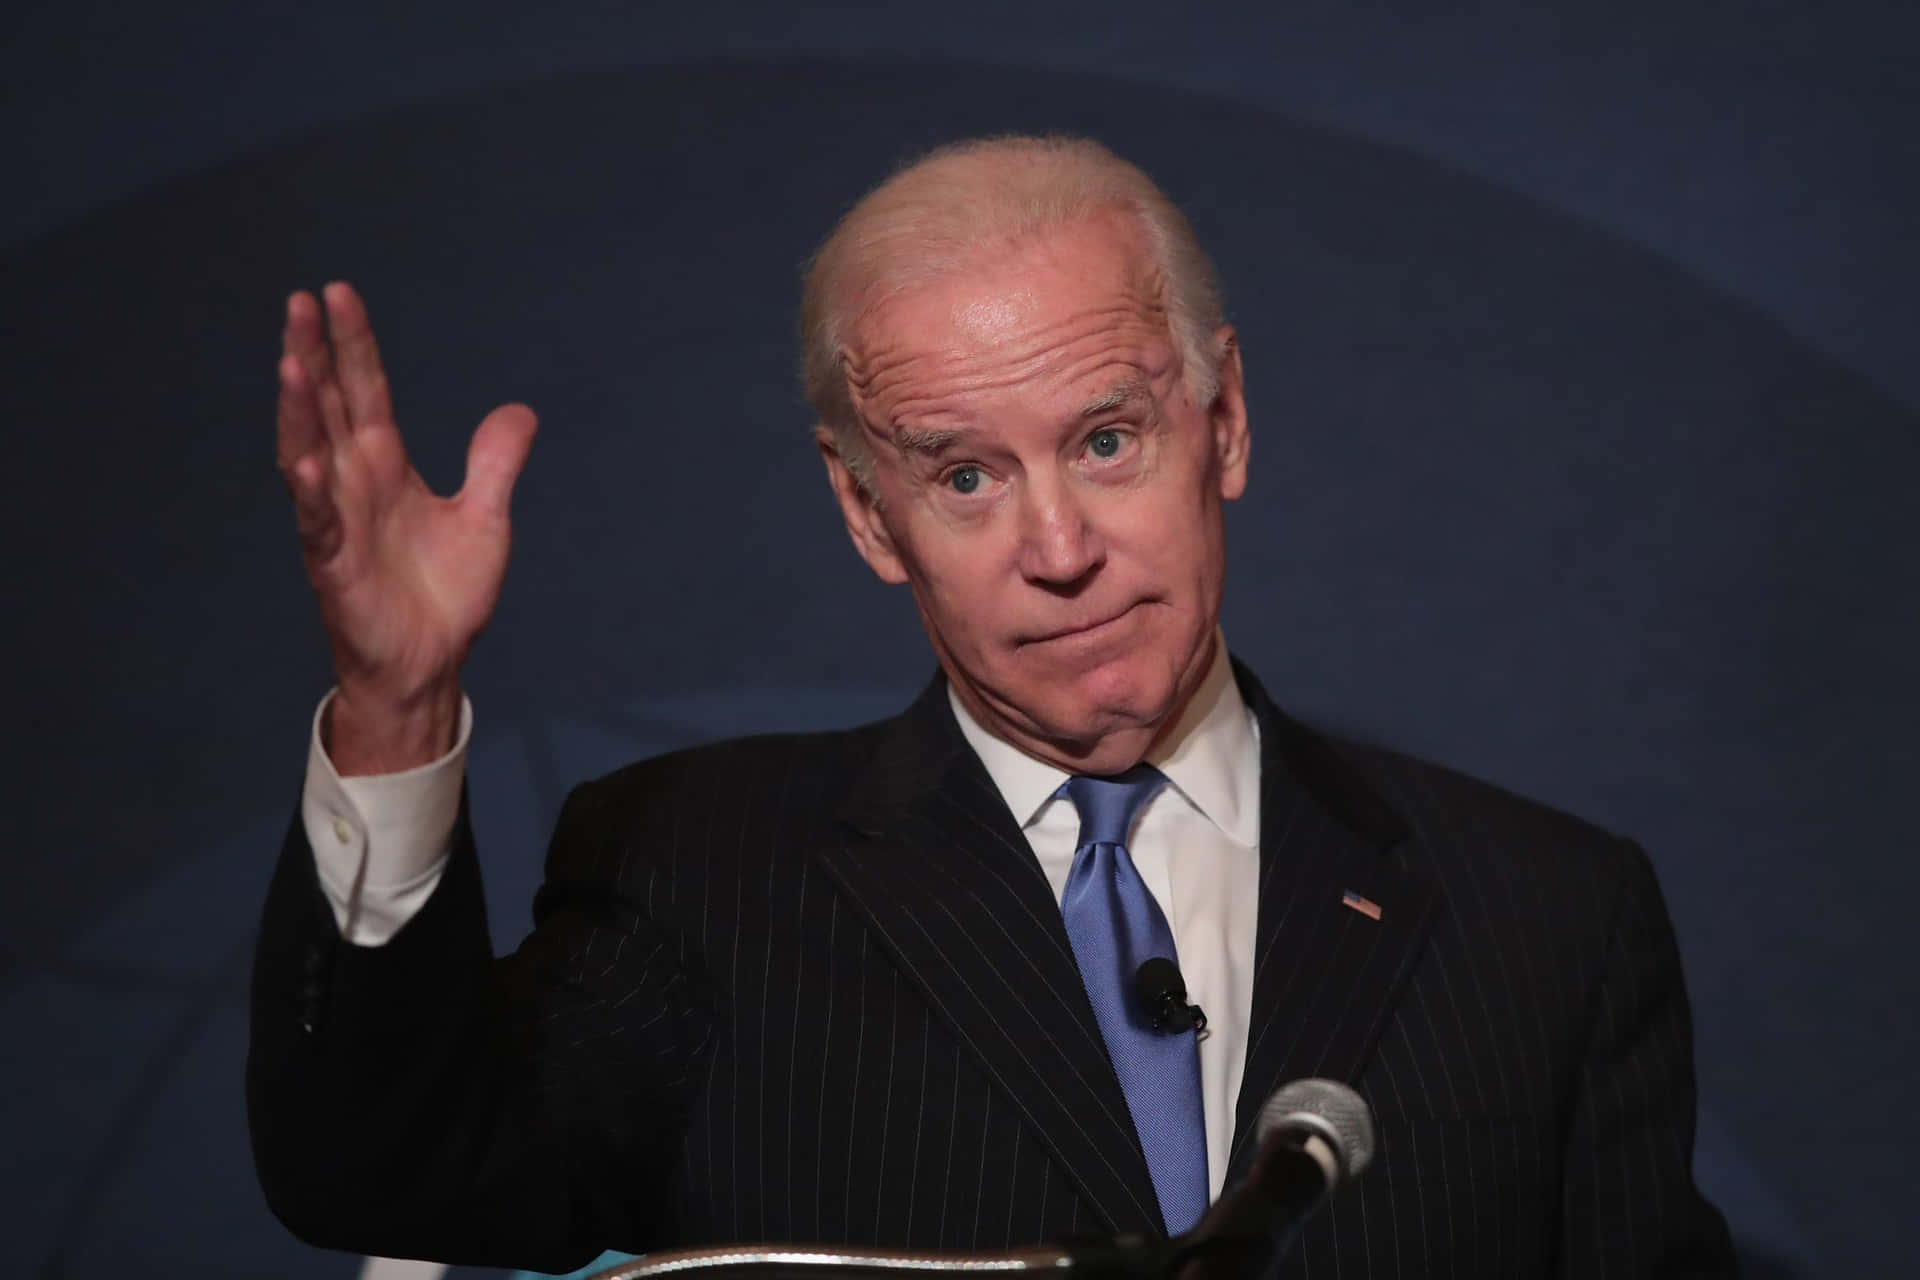 Democratic presidential candidate Joe Biden debates 2020 election issues